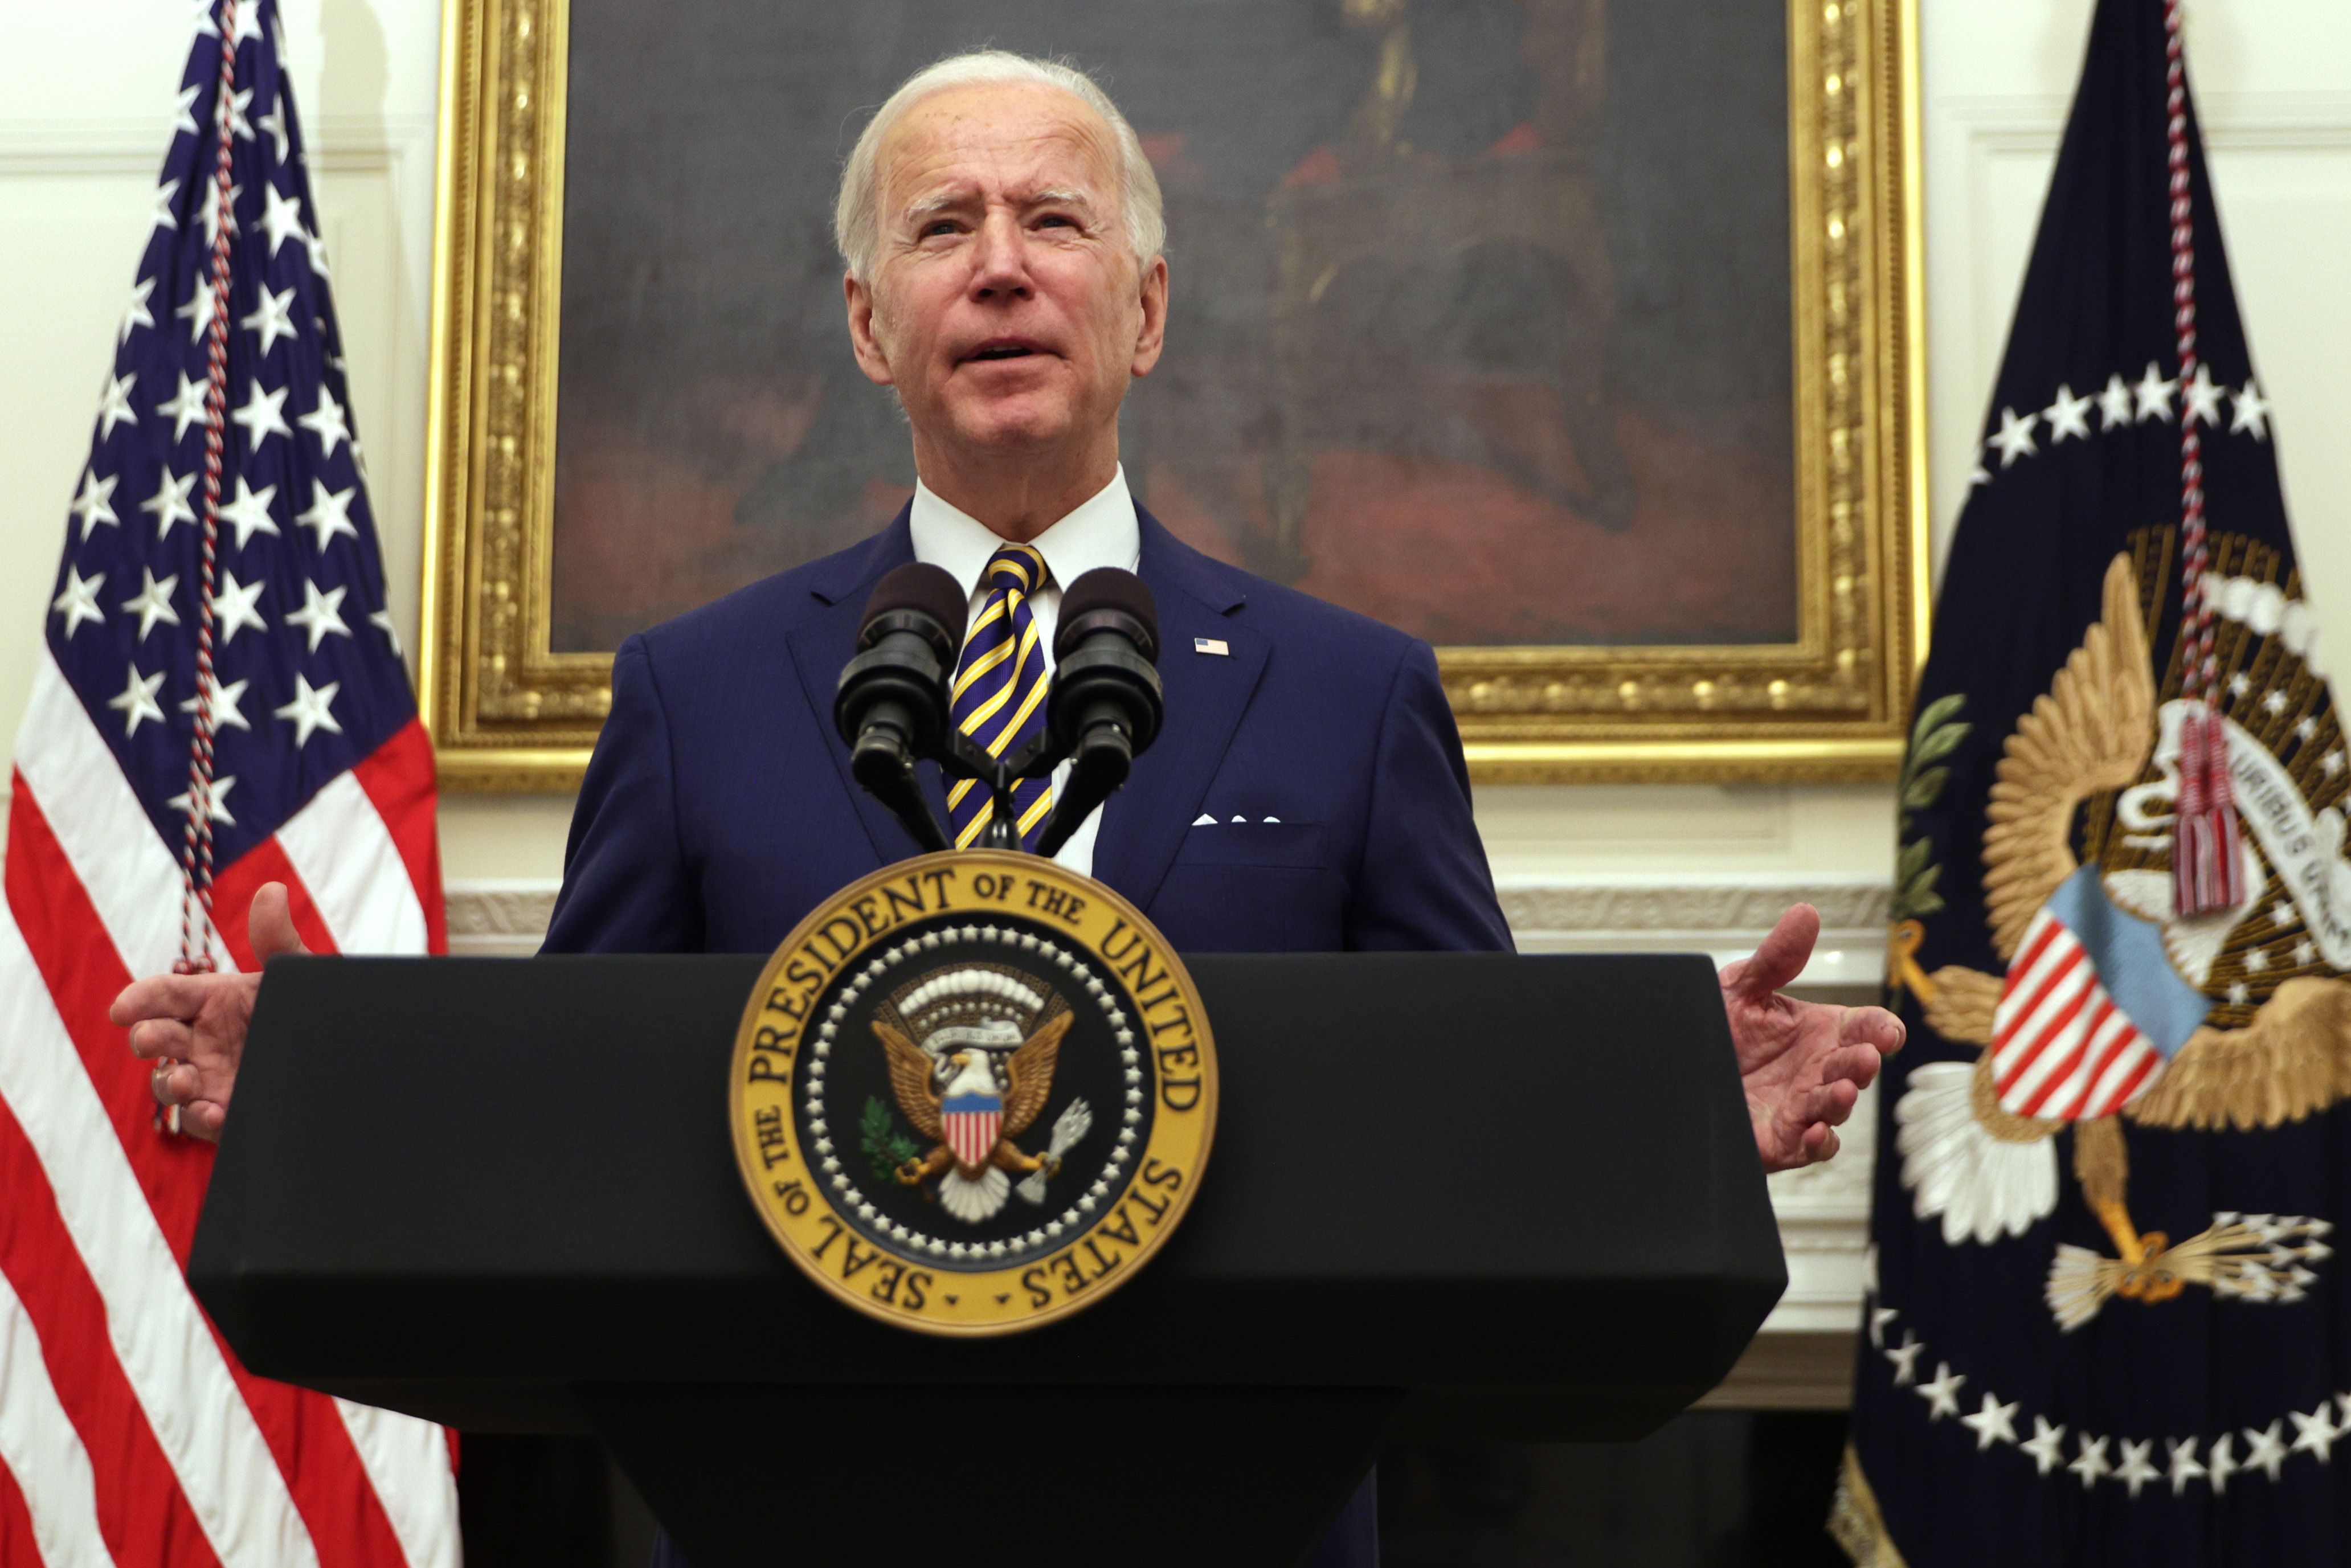 Joe Biden makes an address in the White House.